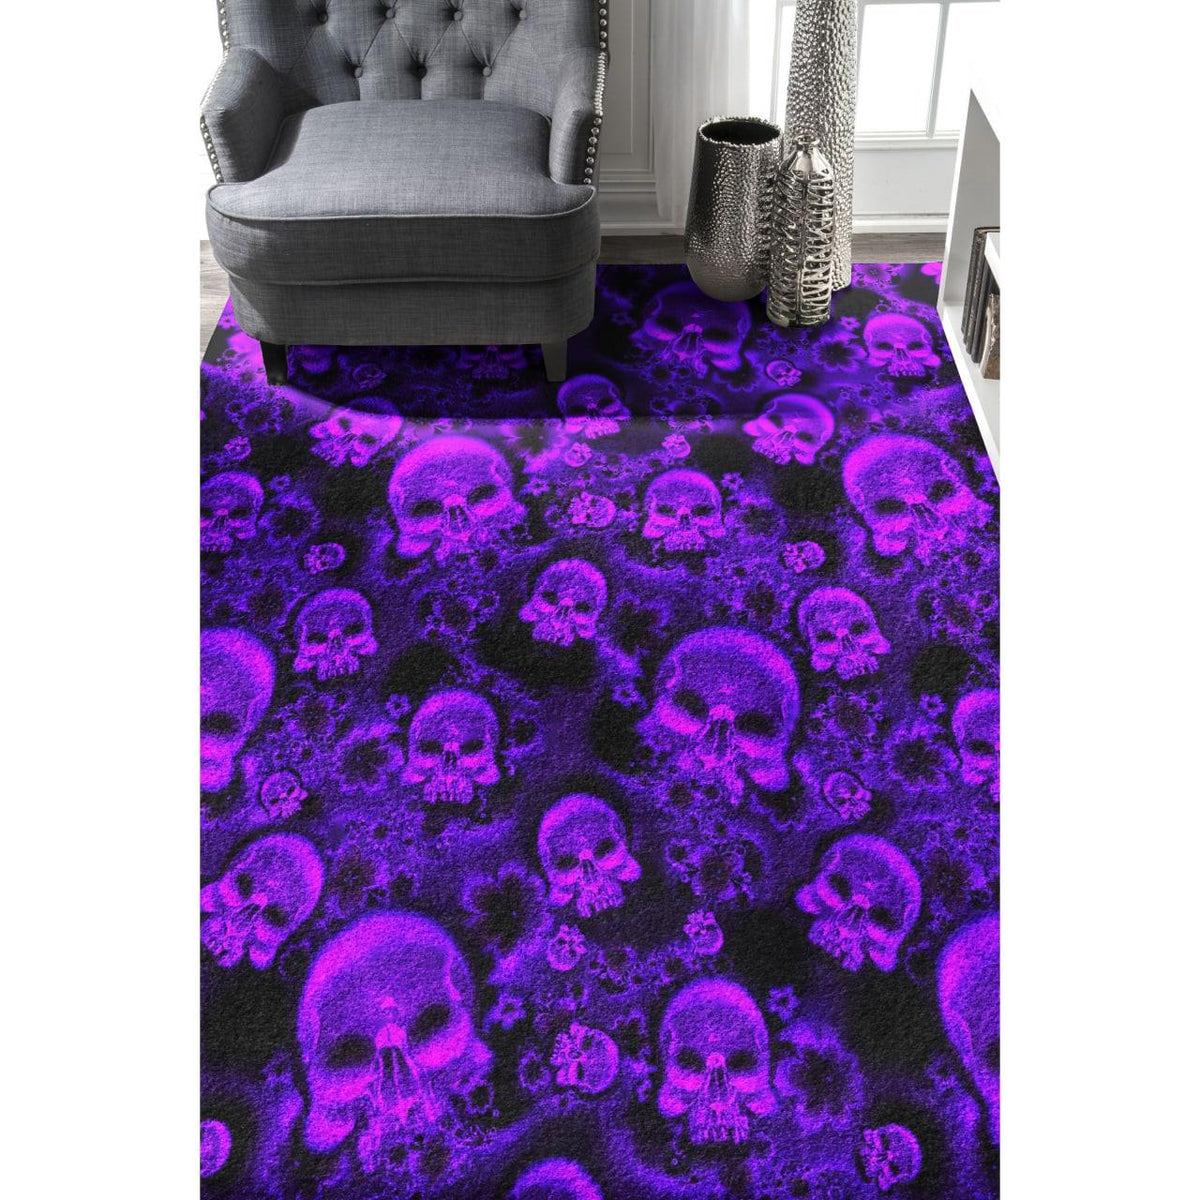 Skull Gothic Dark Purple Flowers Area Rugs - Wonder Skull